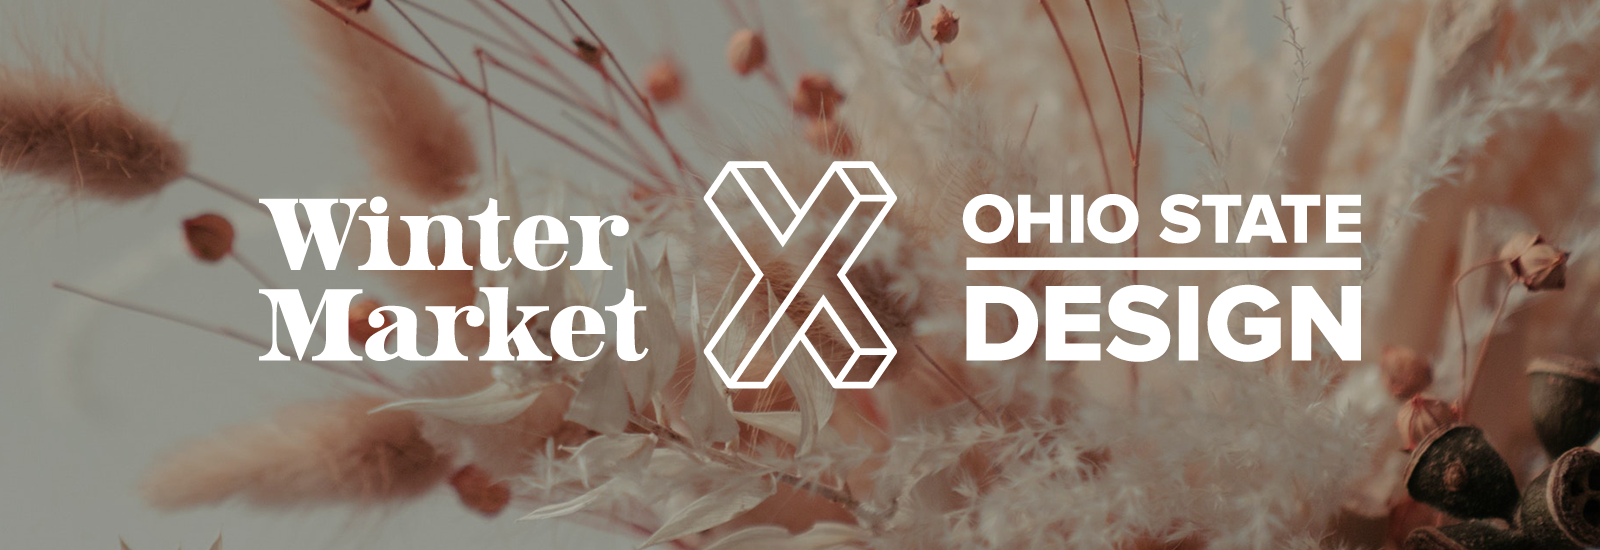 Winter Market x Ohio State Design 